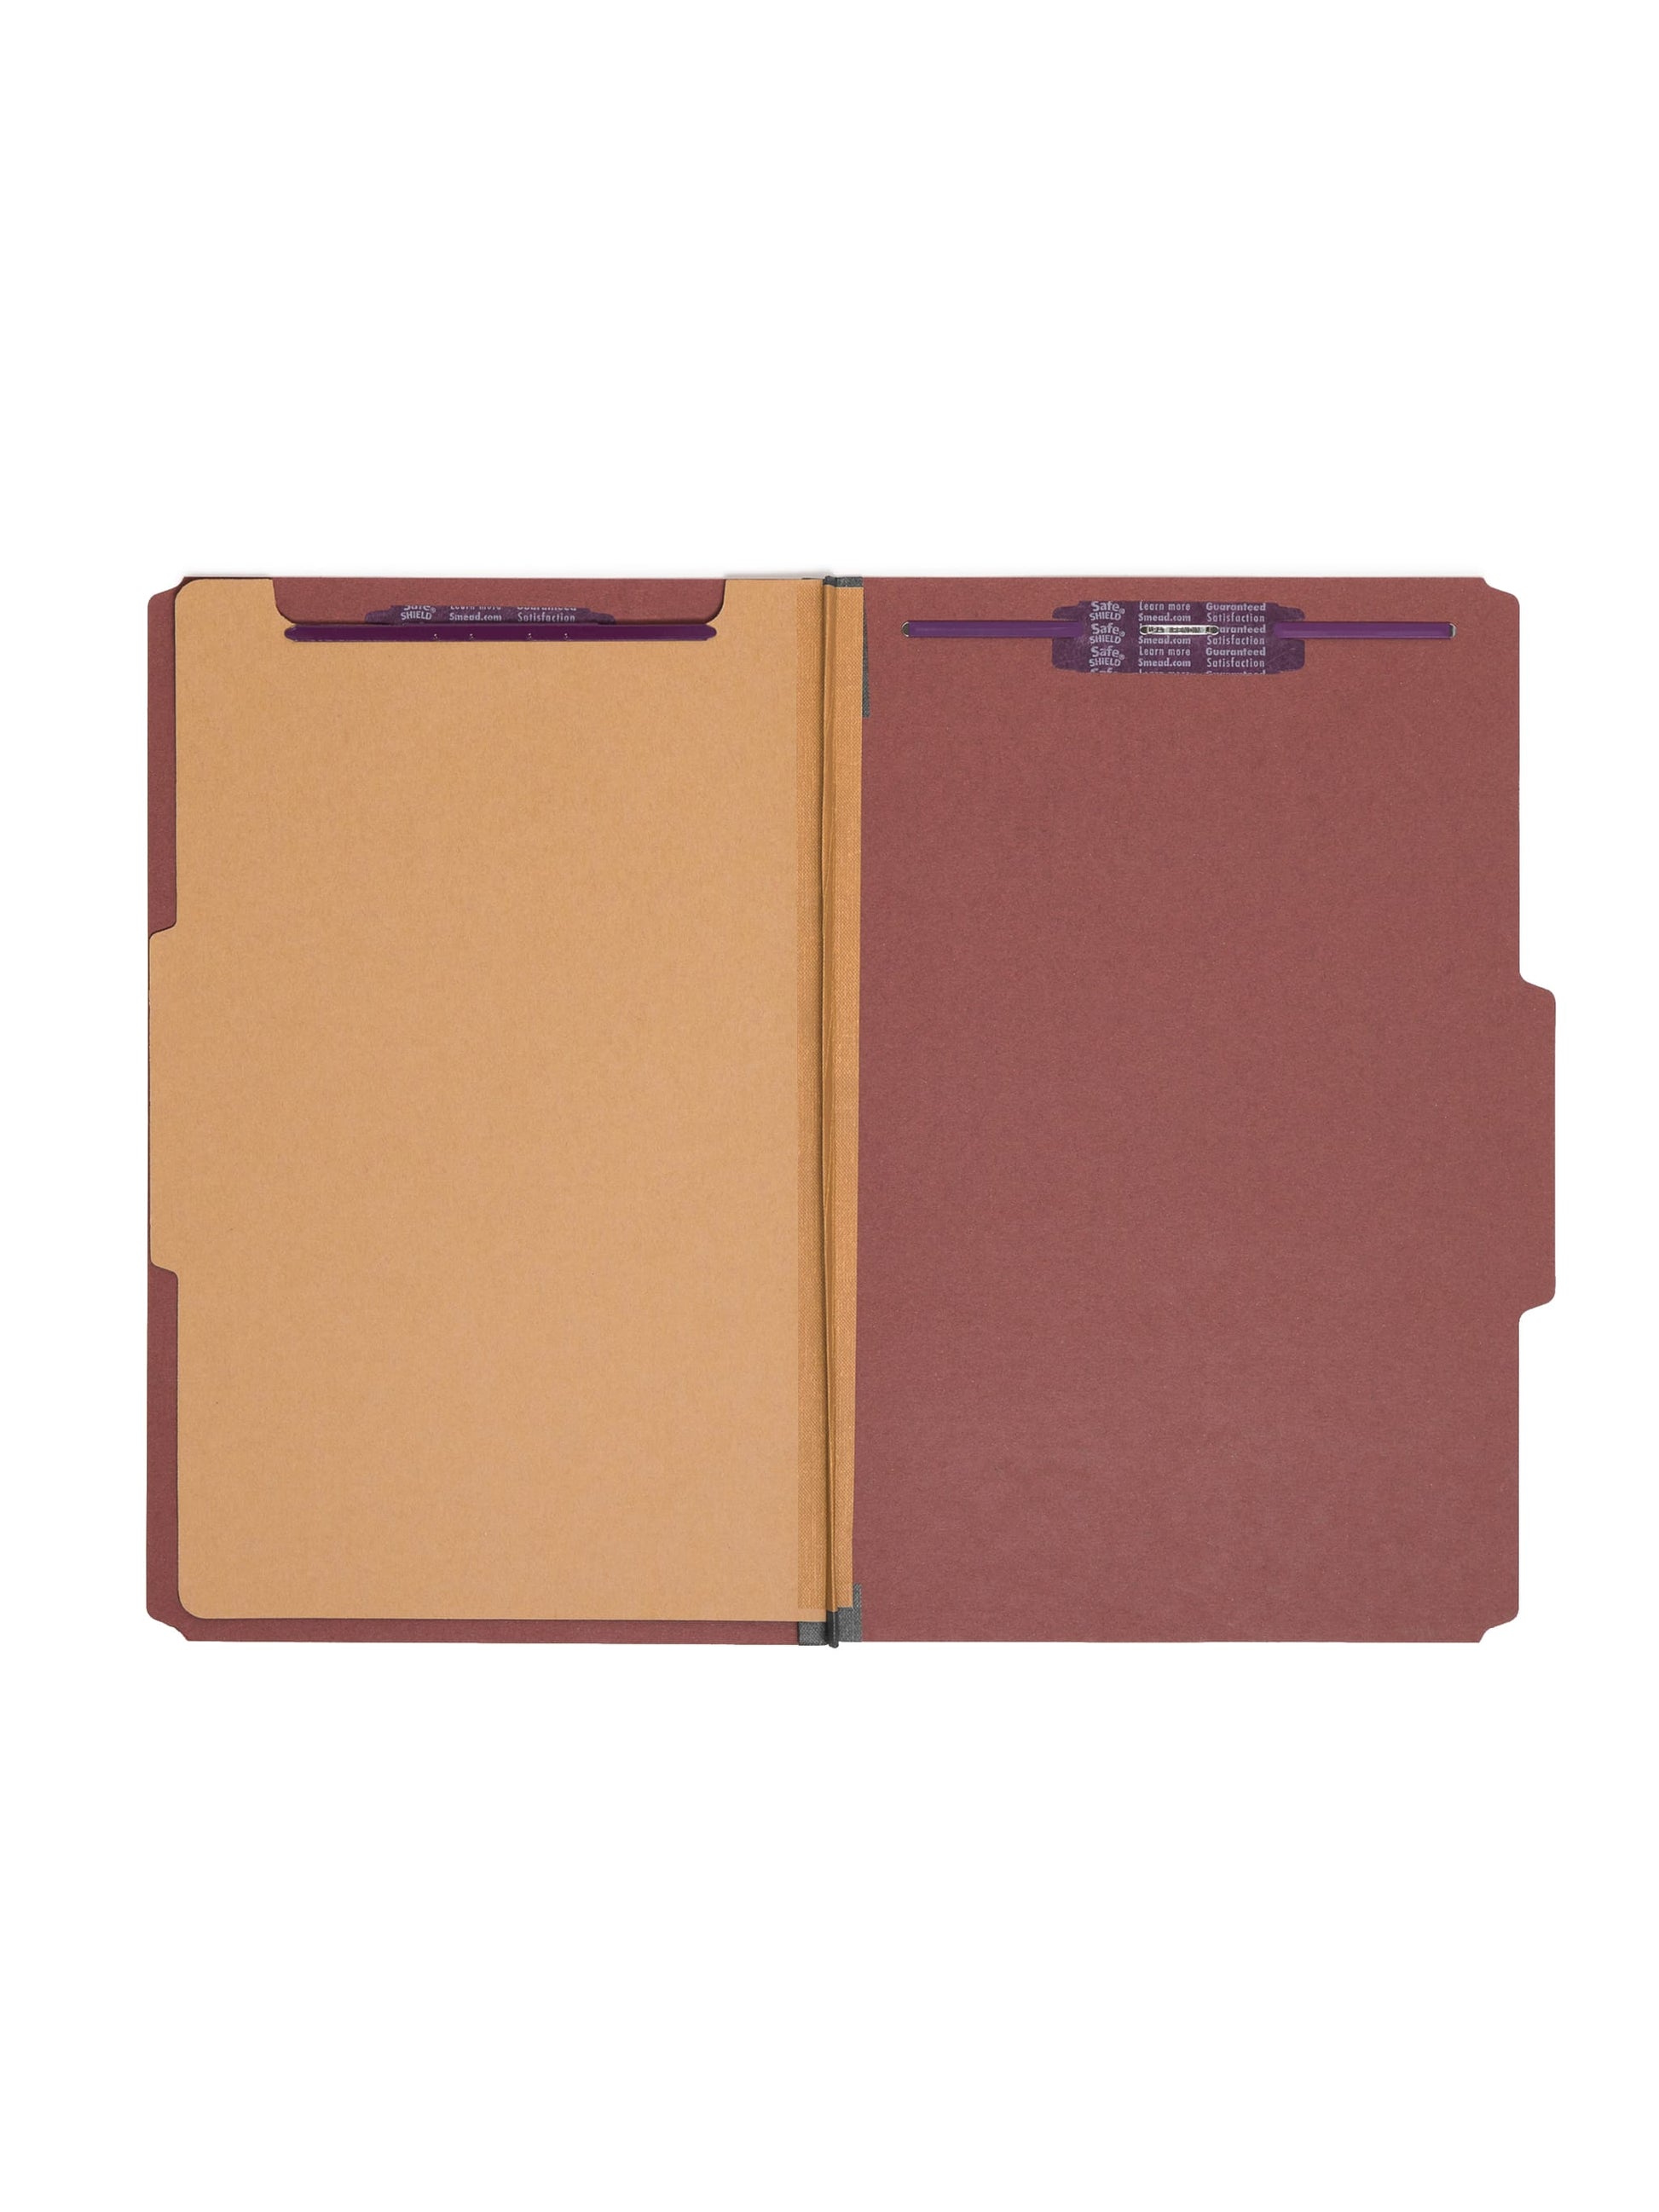 SafeSHIELD® Pressboard Classification File Folders, 1 Divider, 2 inch Expansion, Red Color, Legal Size, Set of 0, 30086486187757